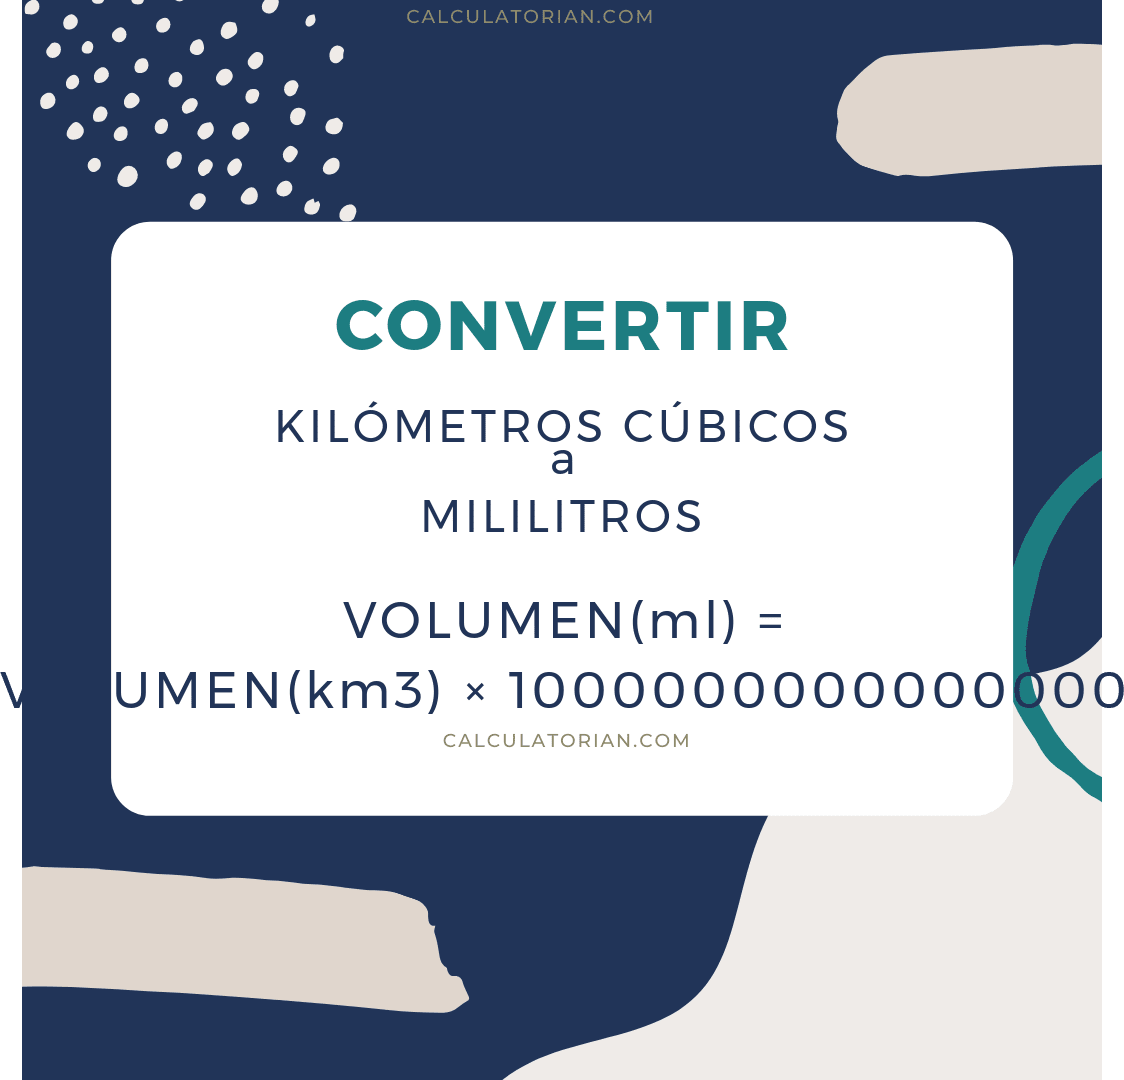 La fórmula para convertir volume de Kilómetros cúbicos a Mililitros